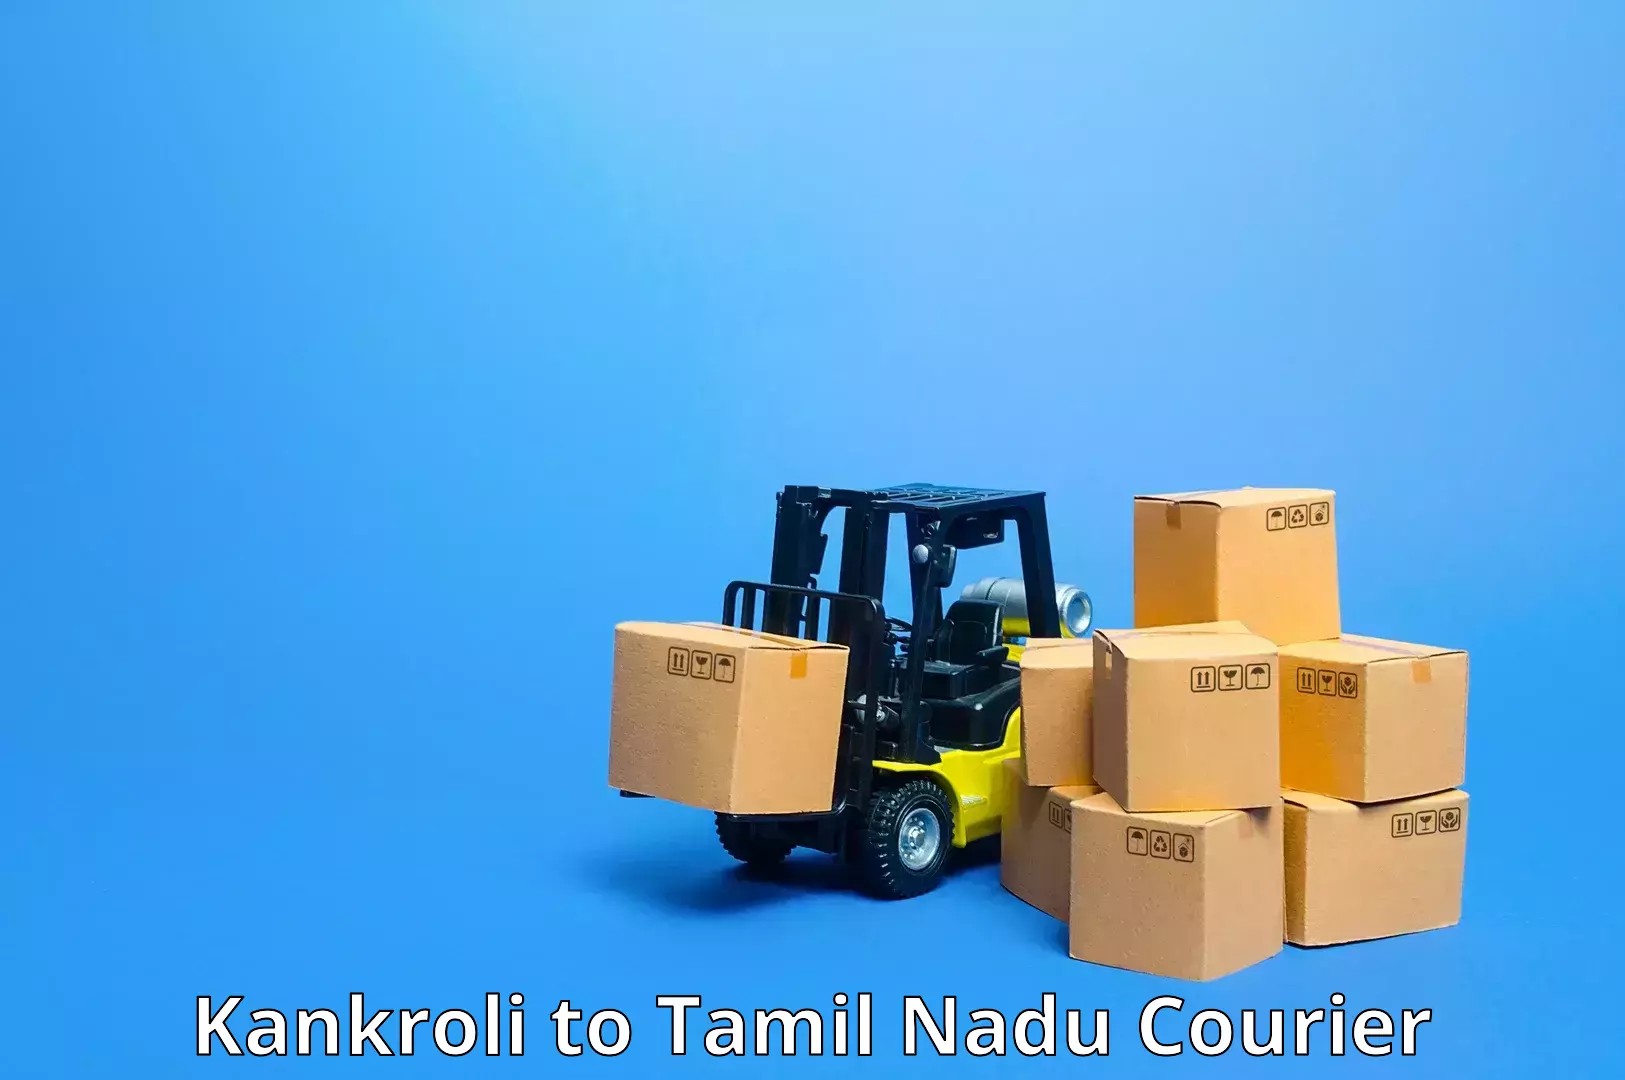 International parcel service Kankroli to SRM Institute of Science and Technology Chennai